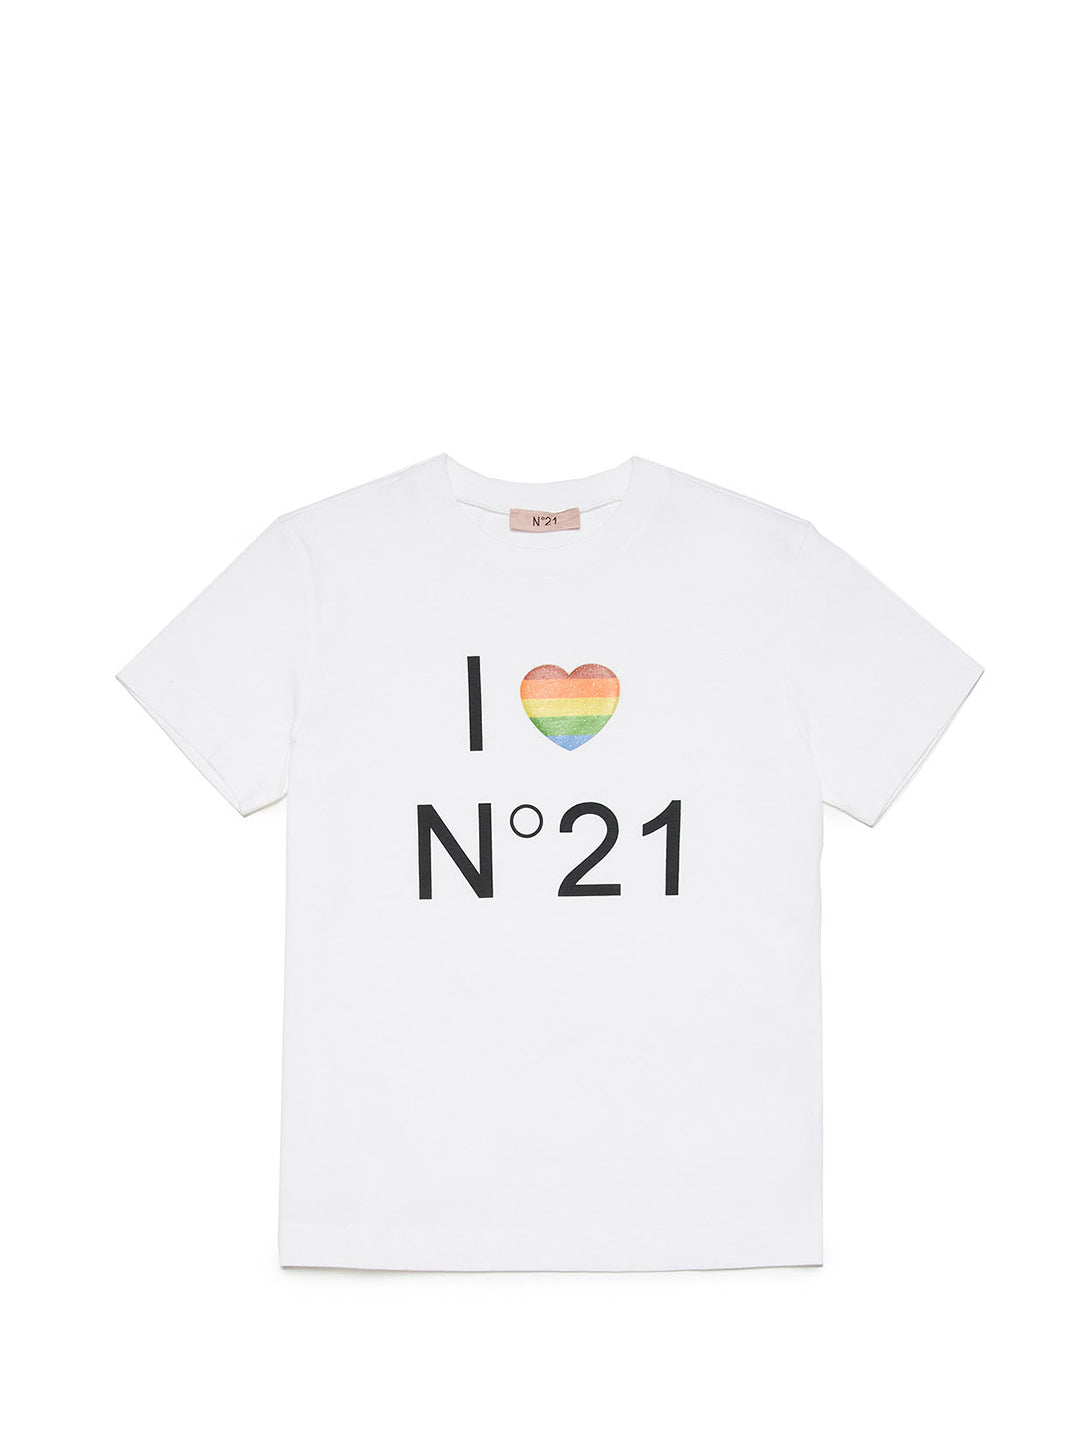 N°21 t-shirt kids bianco basic con grafica "I Love n°21"